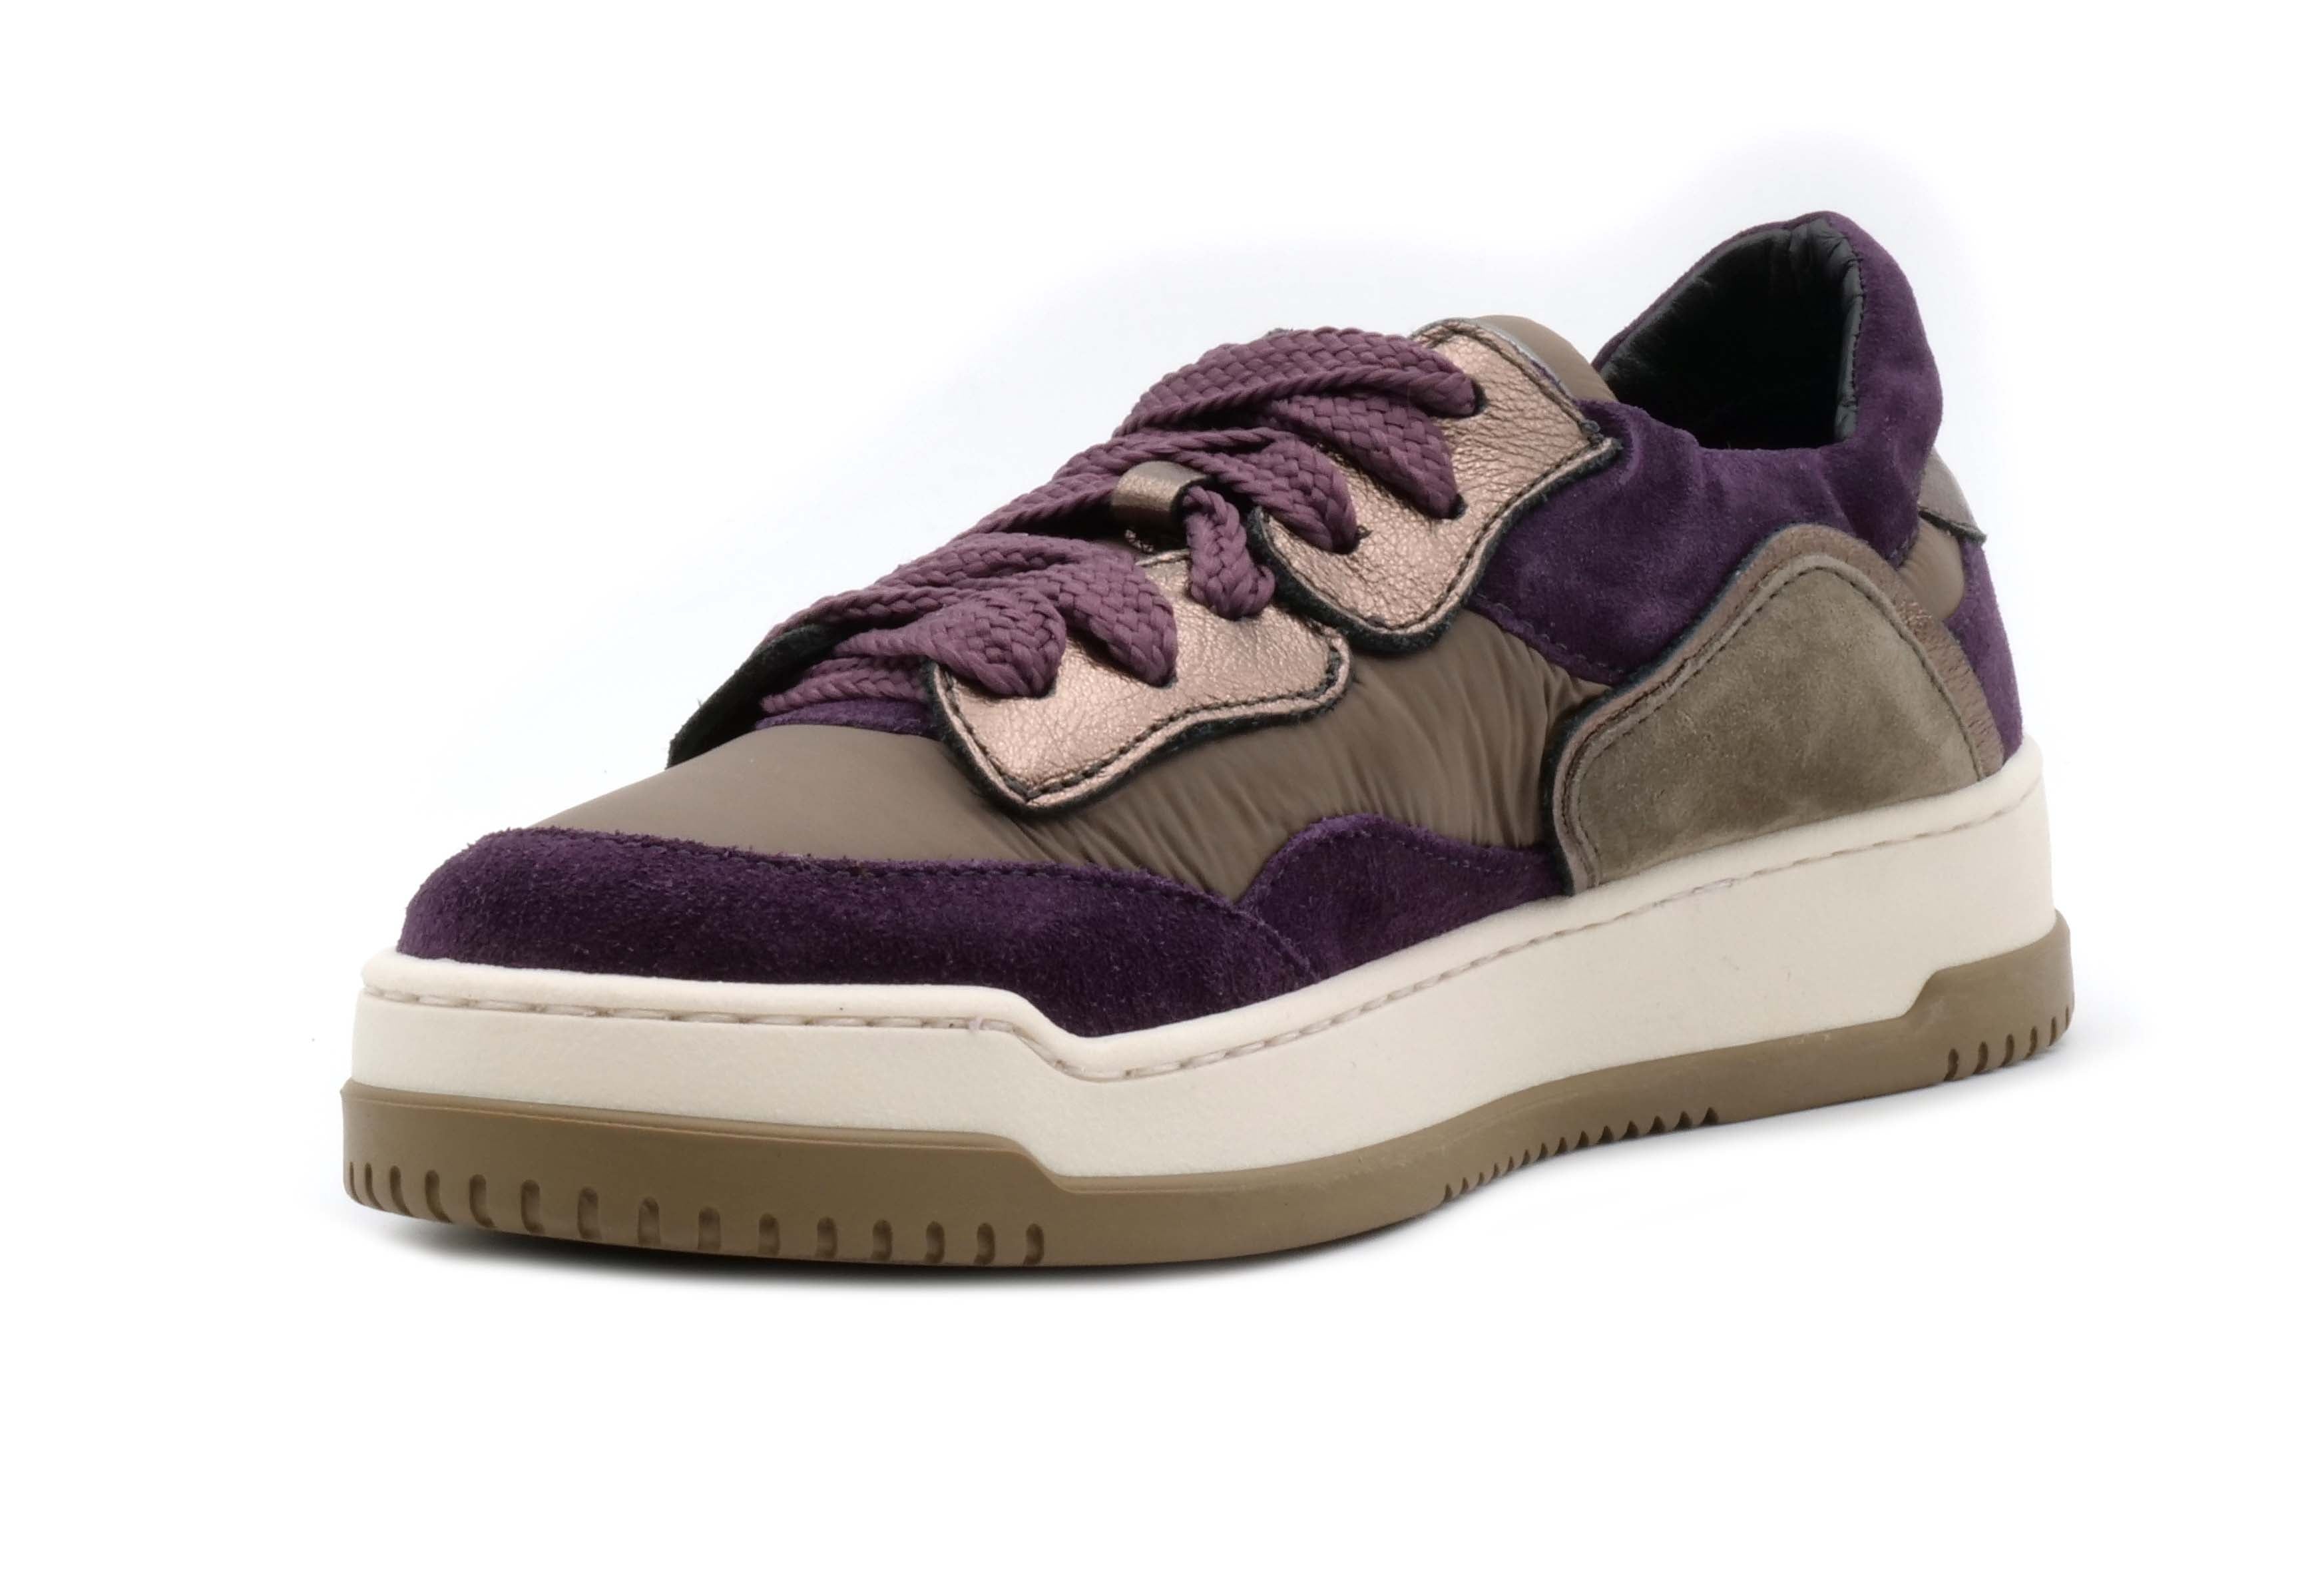 Sneaker ANDIA FORA Meet Violet Purple - Sergio Fabbri